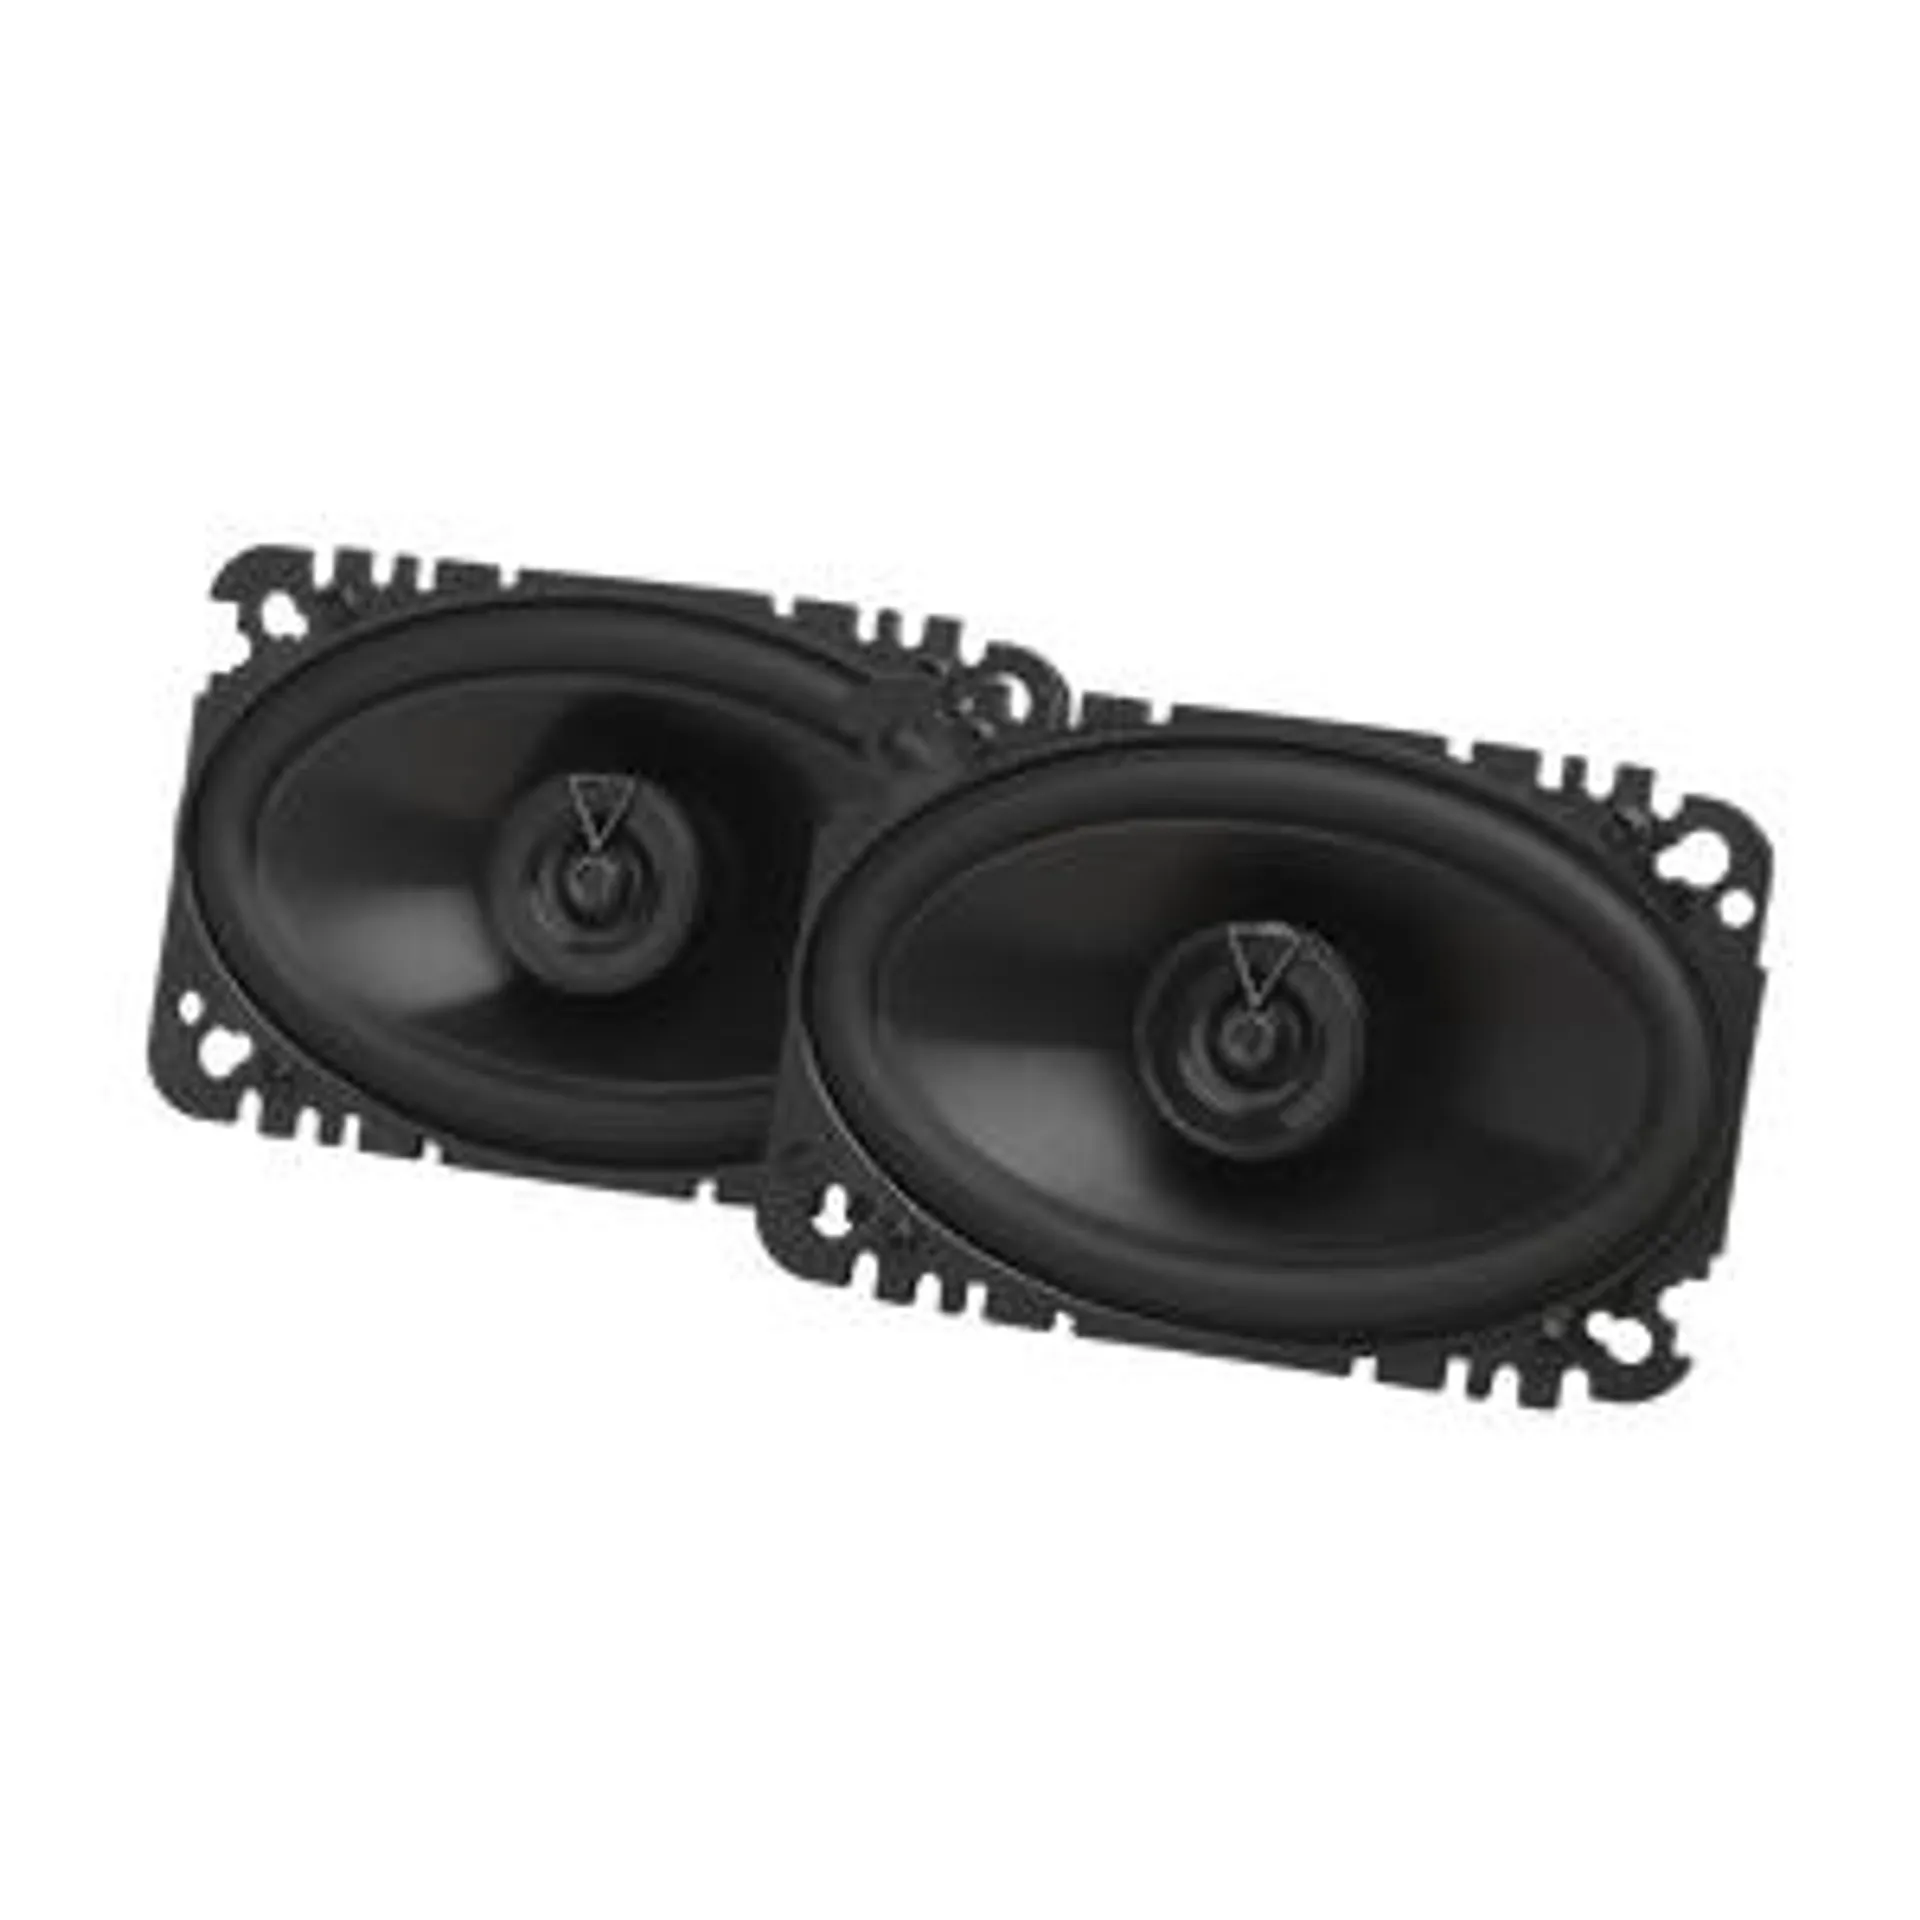 /car-speakers/CLUB644F.html?dwvar_CLUB644F_color=Black-GLOBAL-Current&cgid=car-speakers